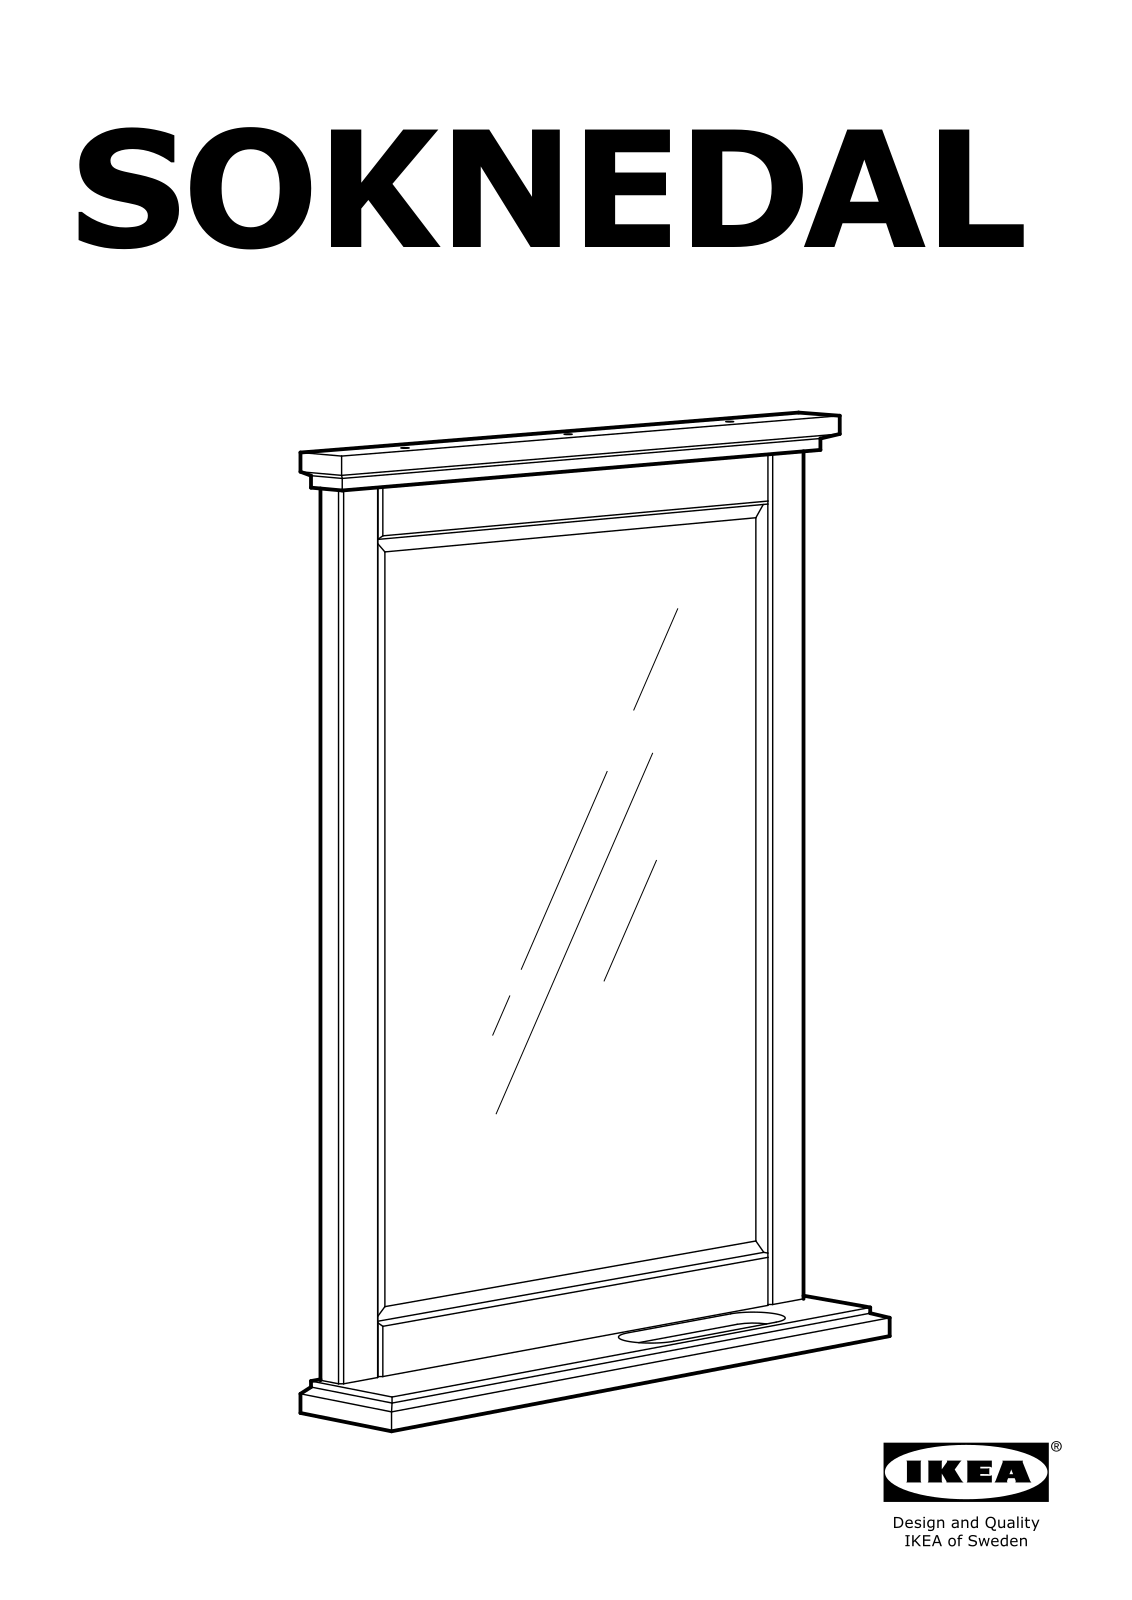 IKEA SOKNEDAL User Manual